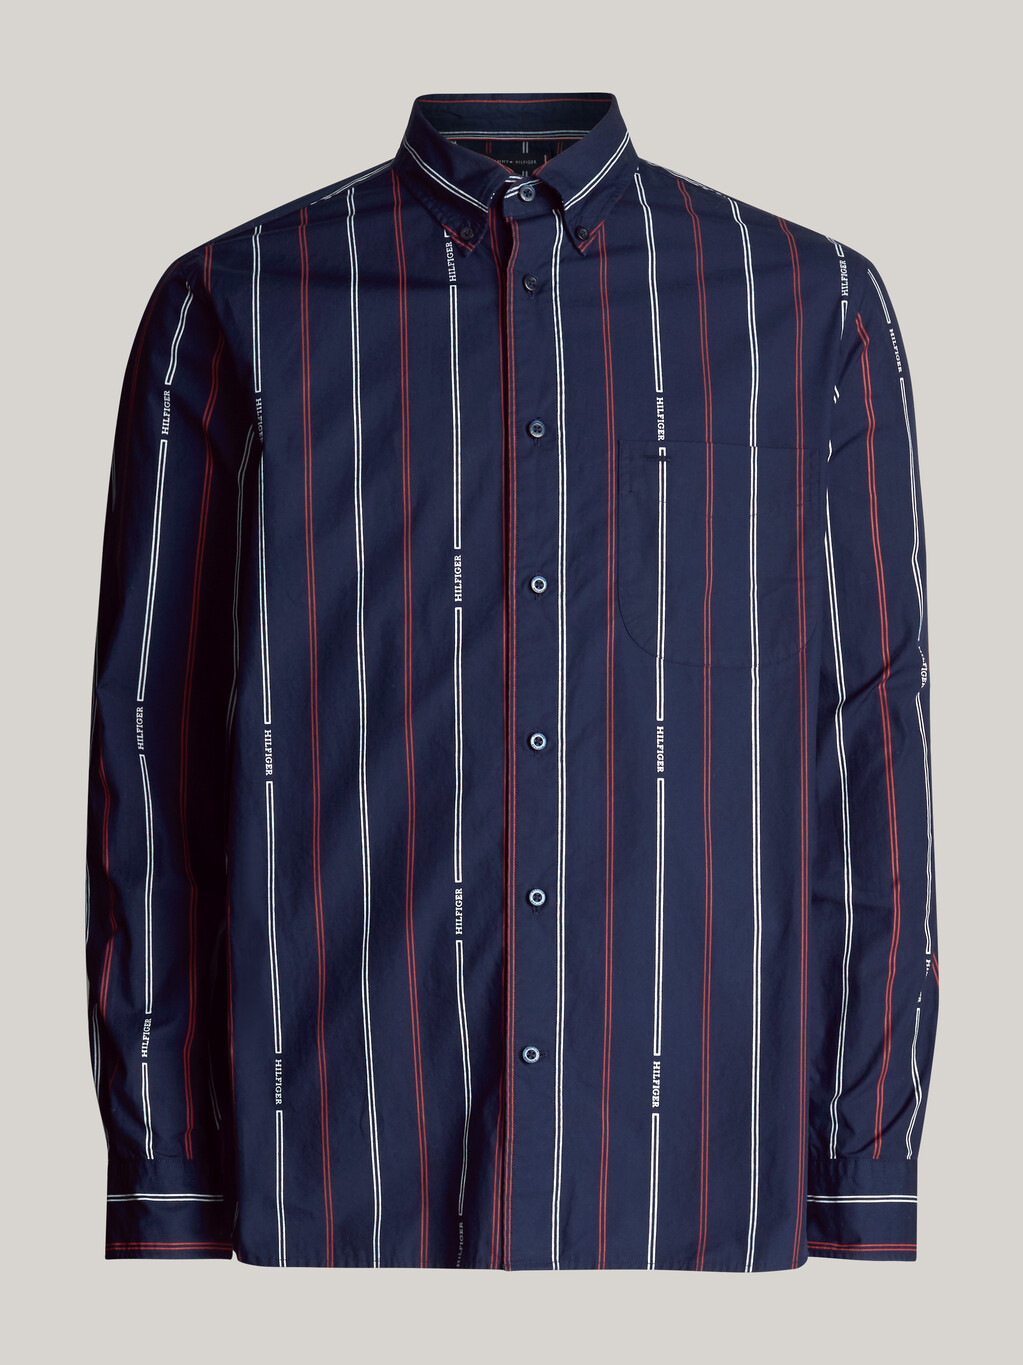 Hilfiger Monotype Pinstripe Regular Fit Shirt, Carbon Navy / Multi, hi-res